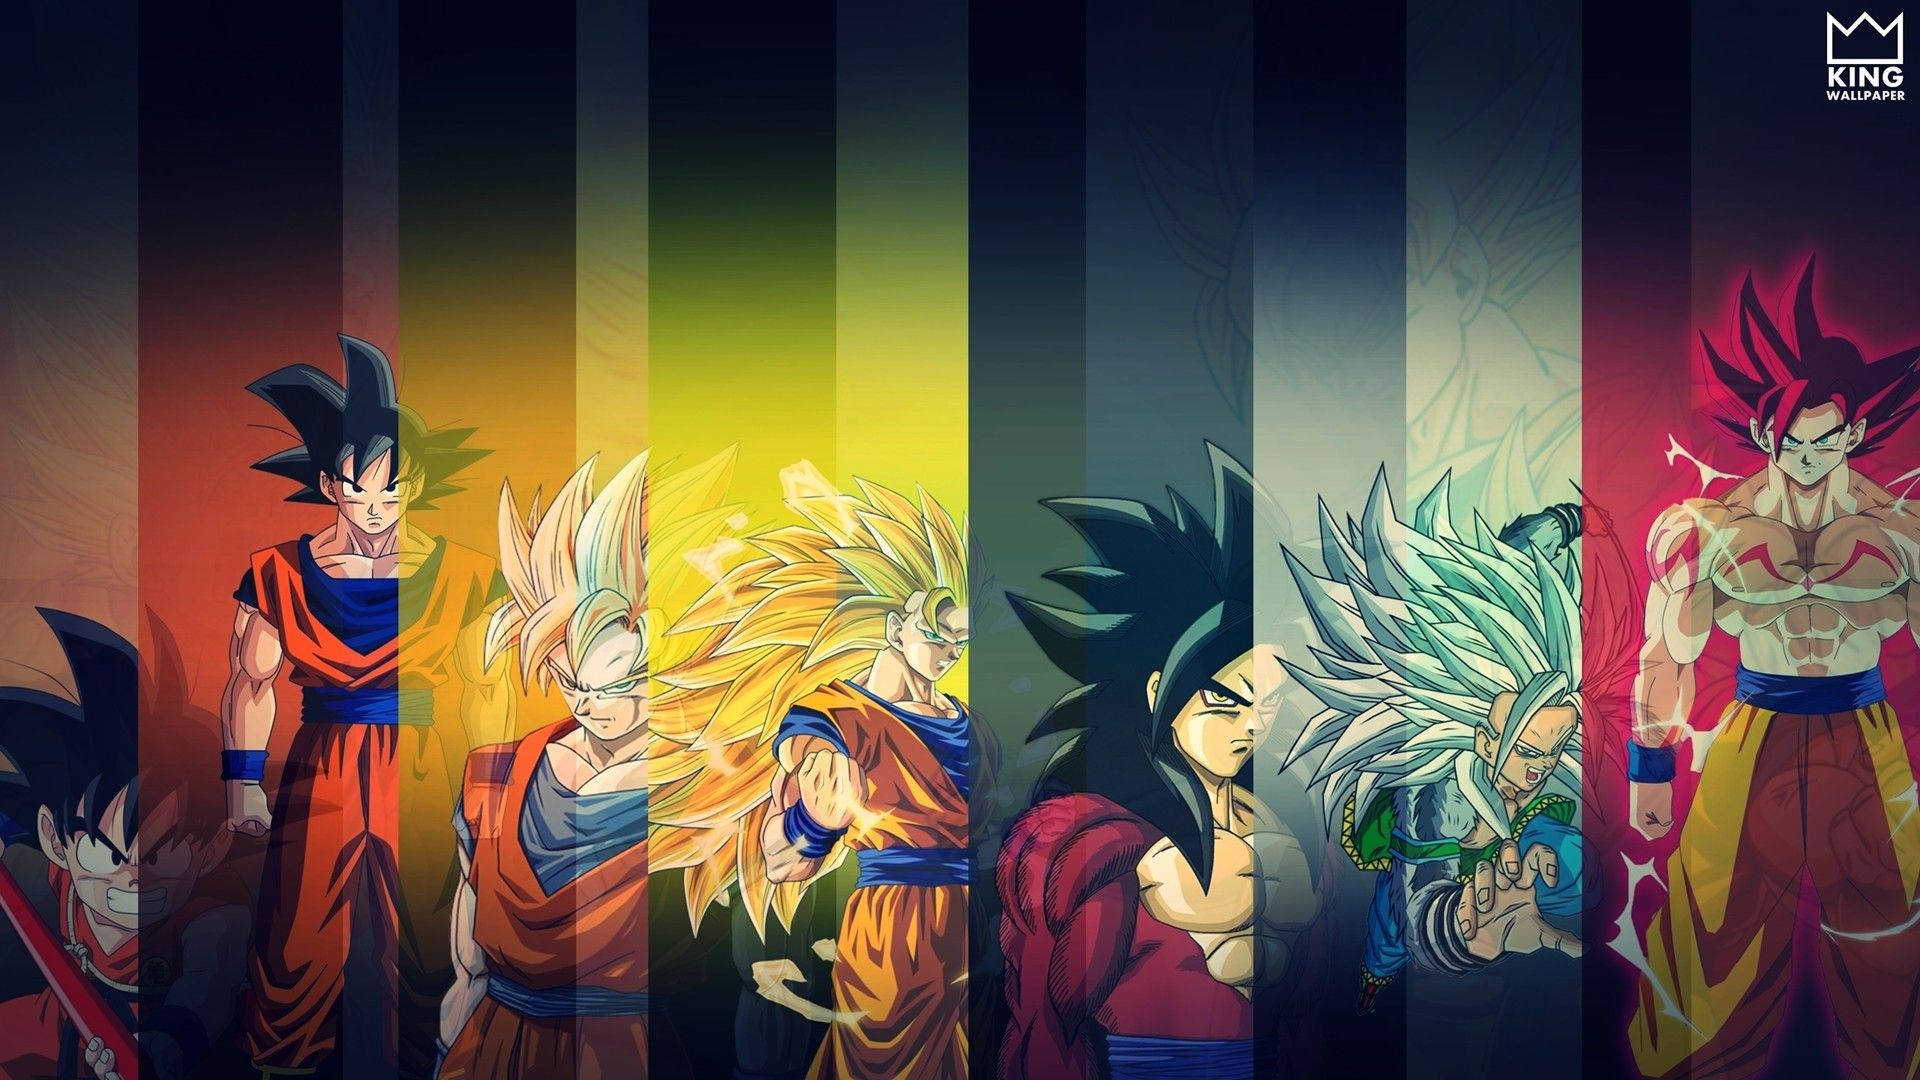 Son Goku unleashing incredible power through his legendary transformations! Wallpaper